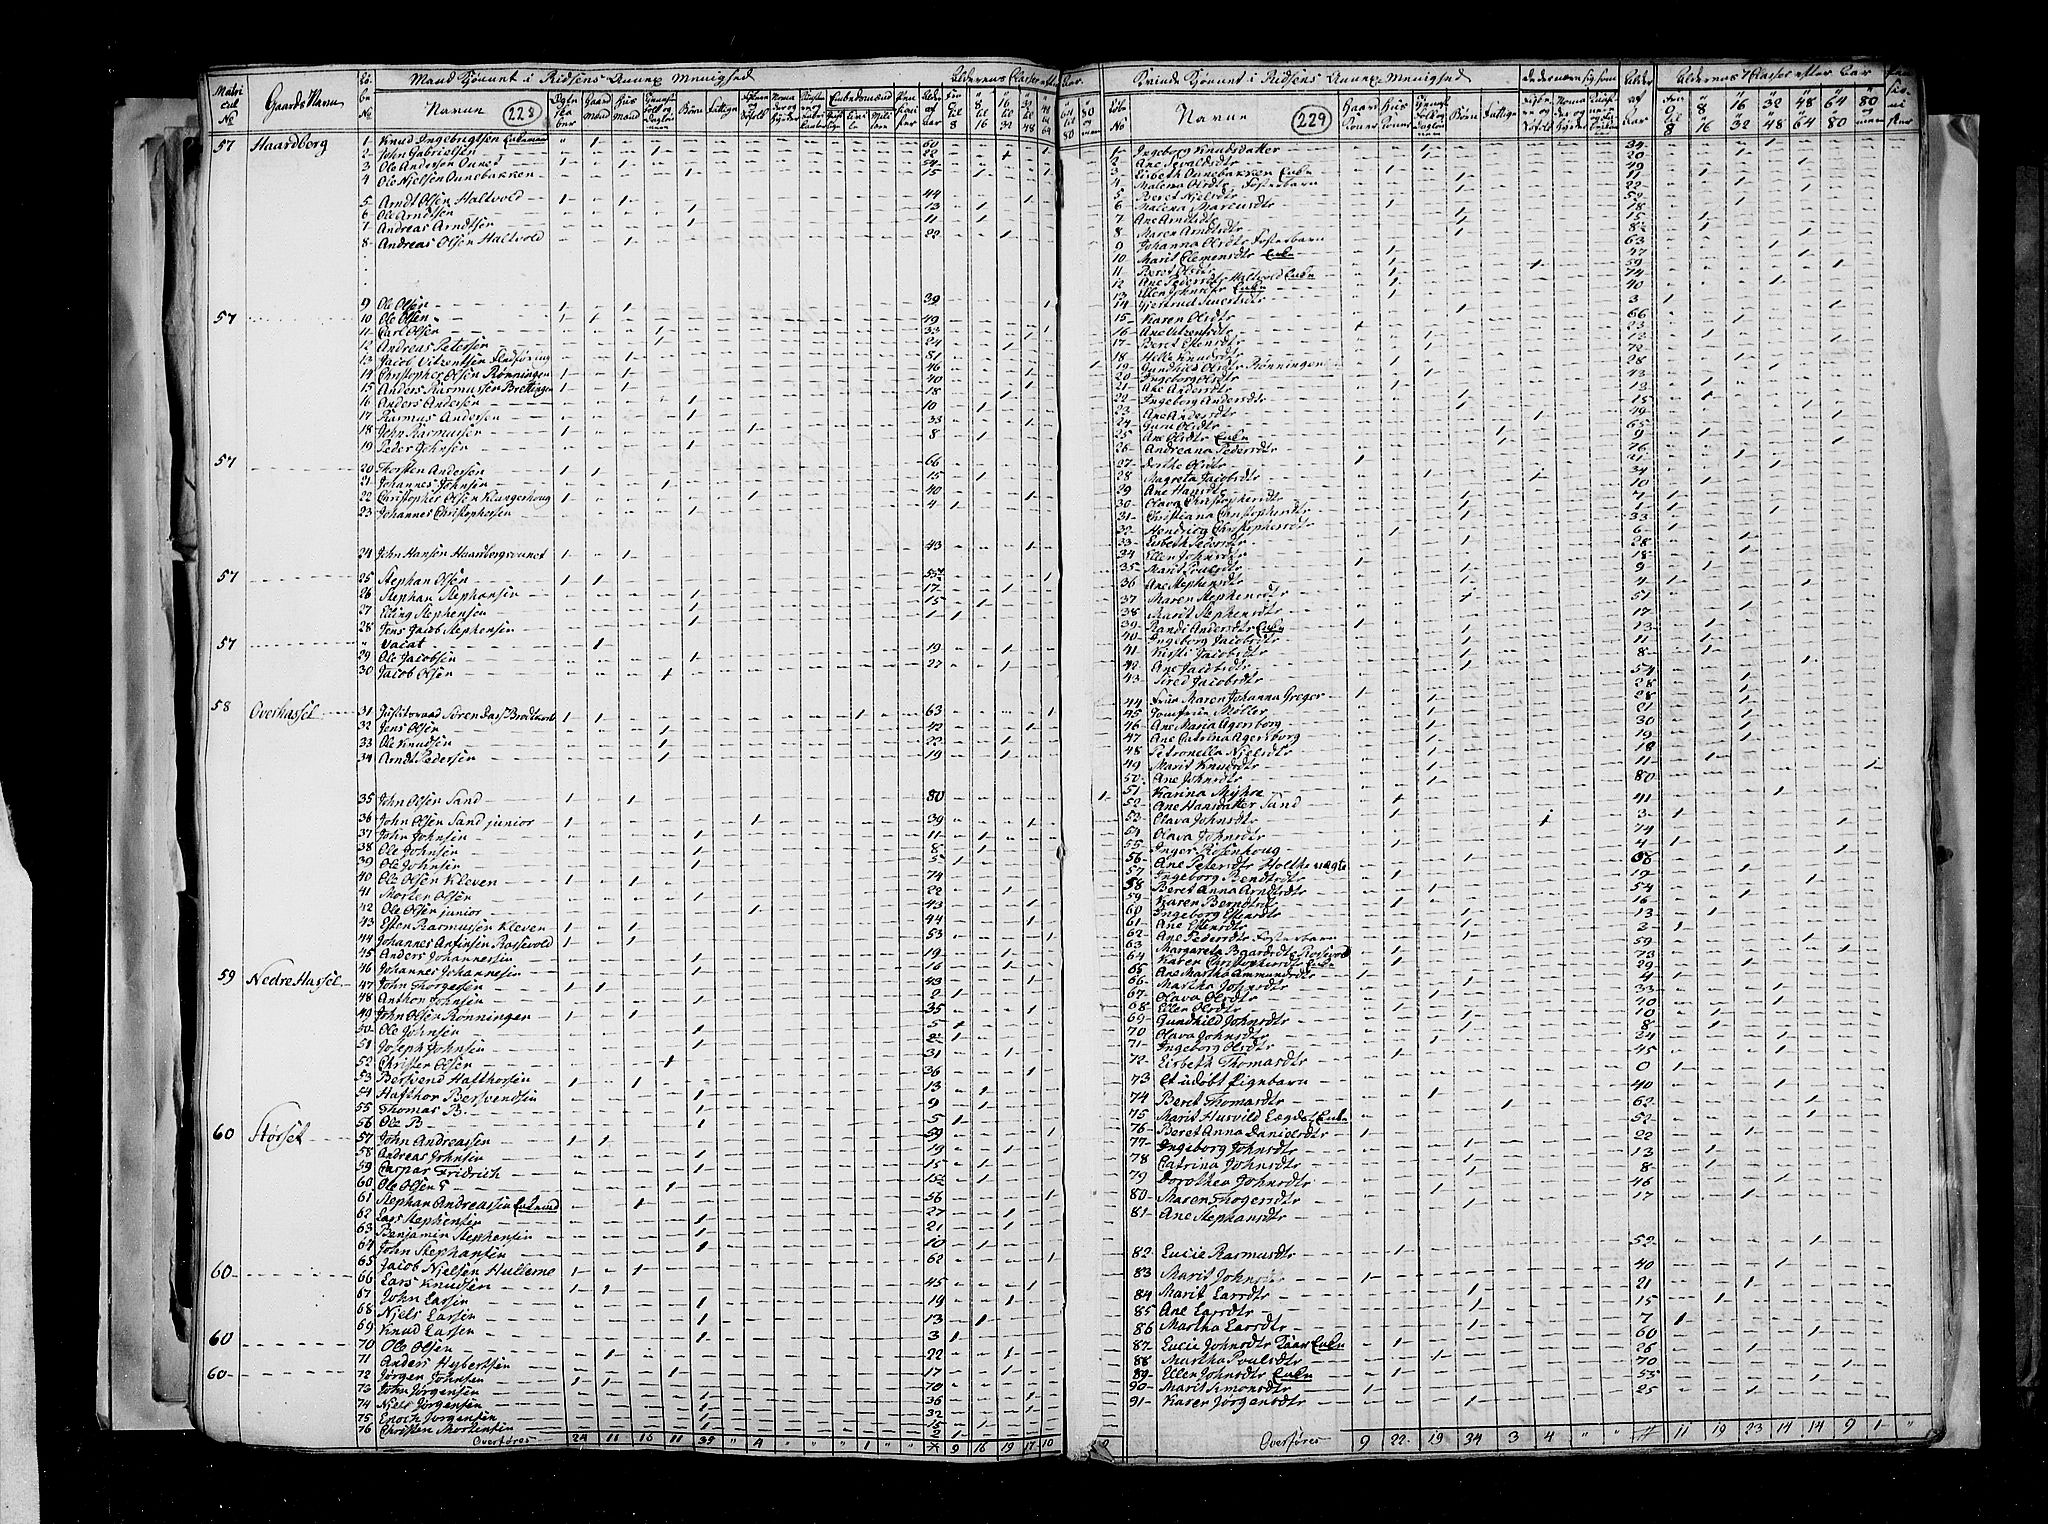 RA, Census 1815, vol. 2: Bergen stift and Trondheim stift, 1815, p. 146